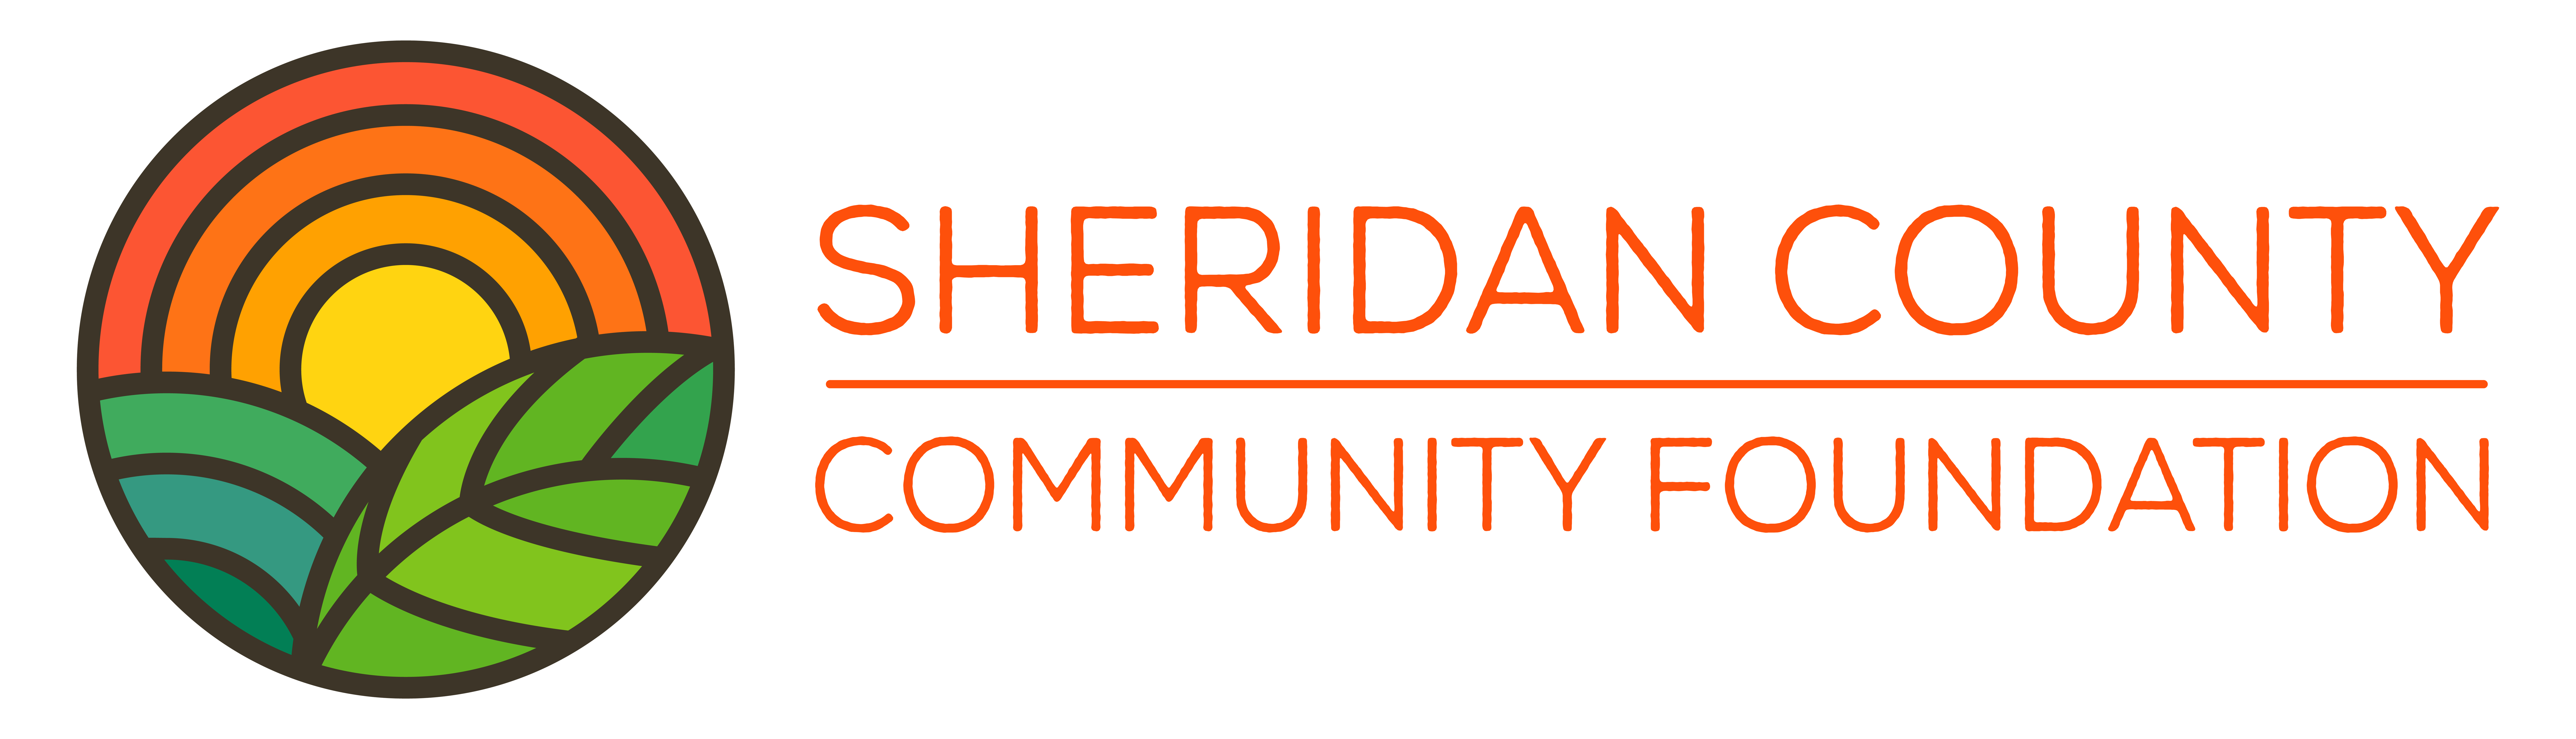 Sheridan County Community Foundation